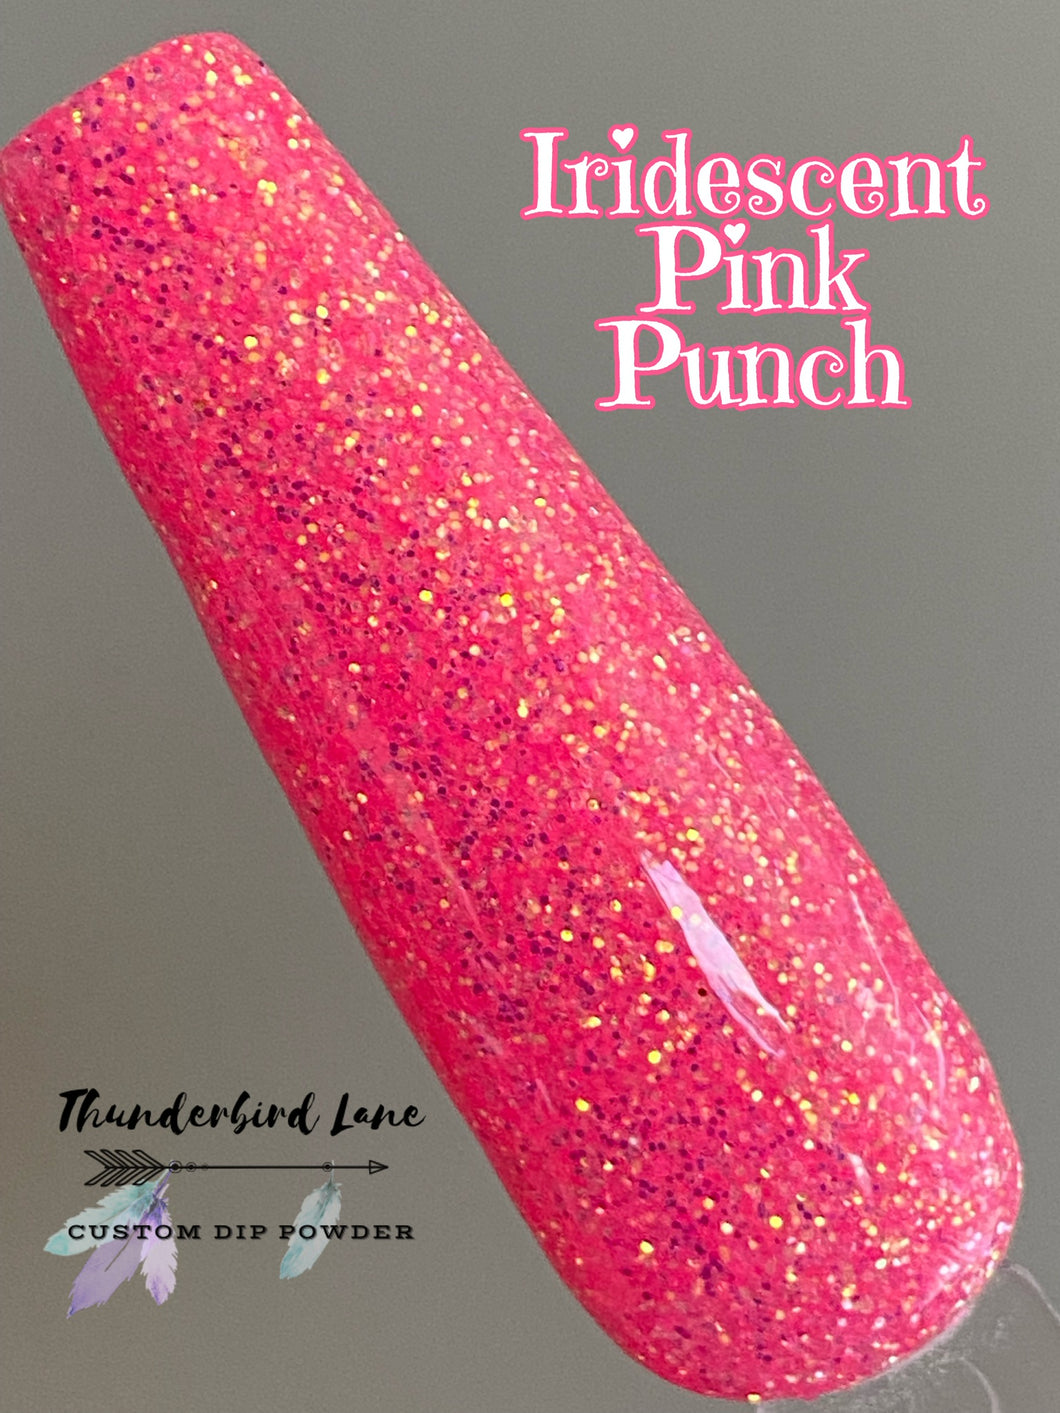 Iridescent Pink Punch